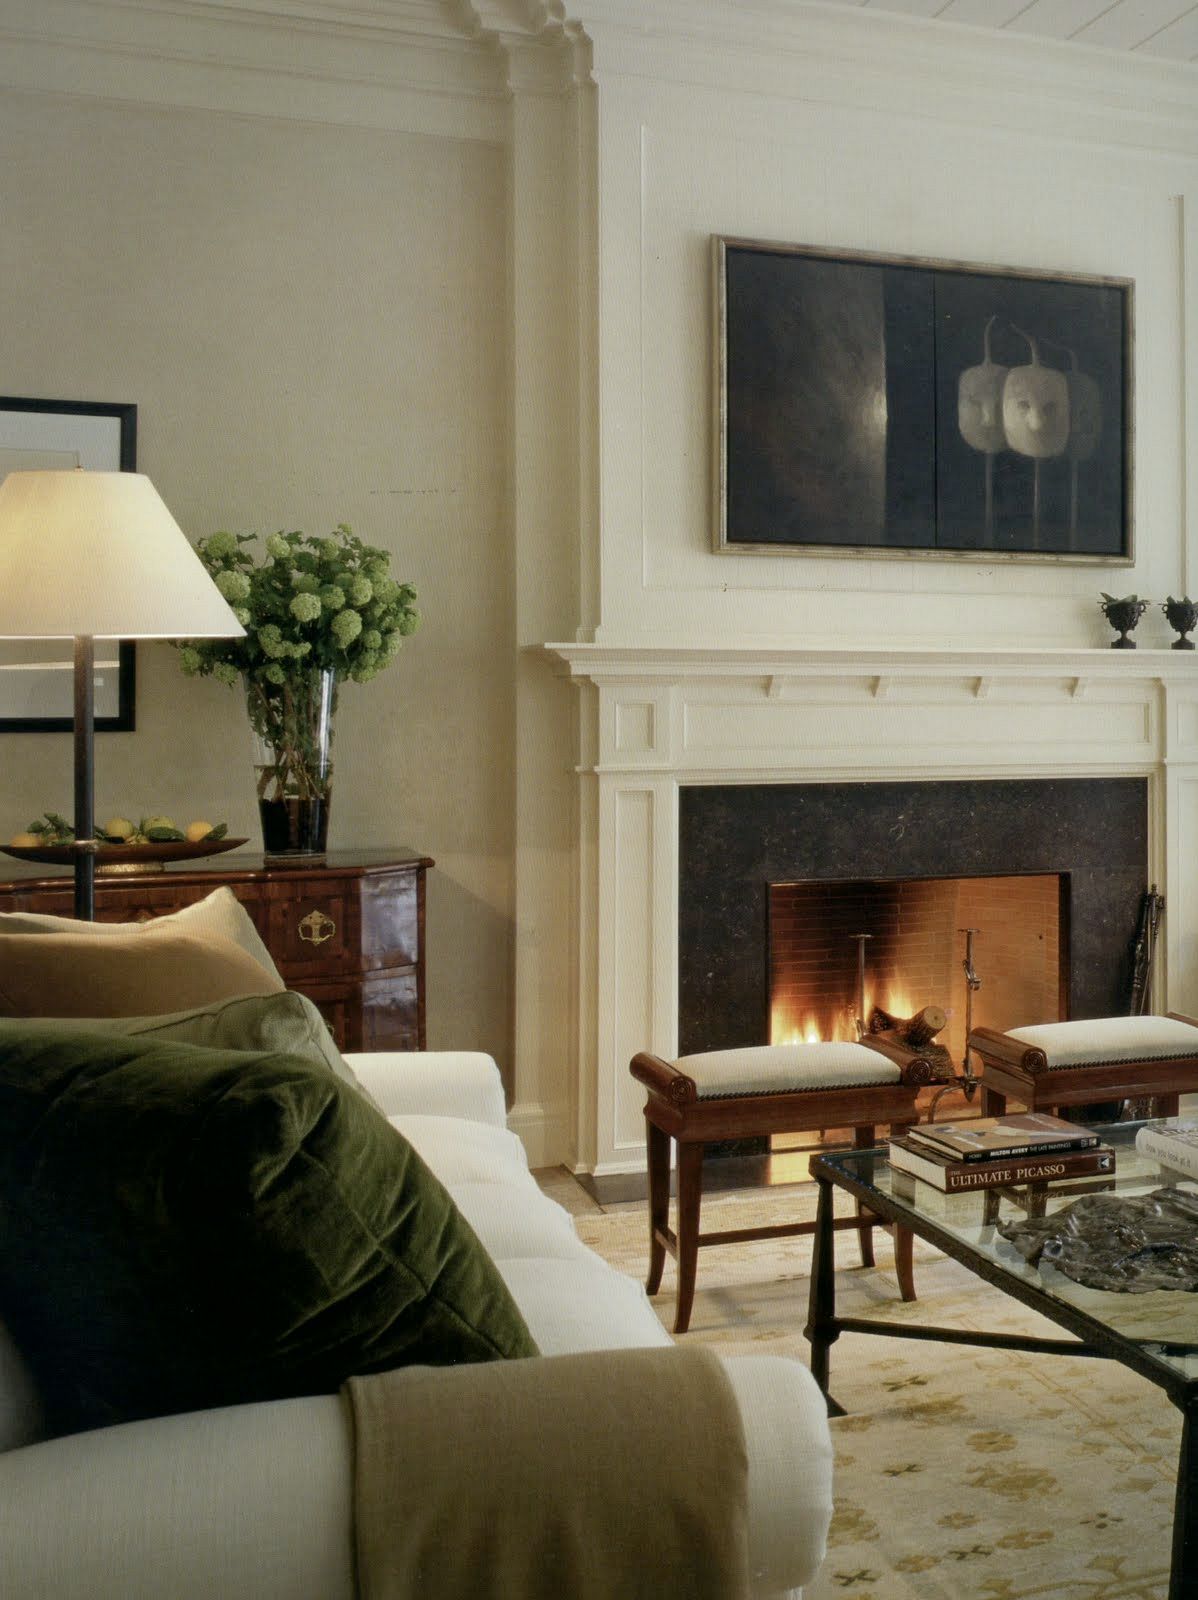 fireplace mantel decorating ideas